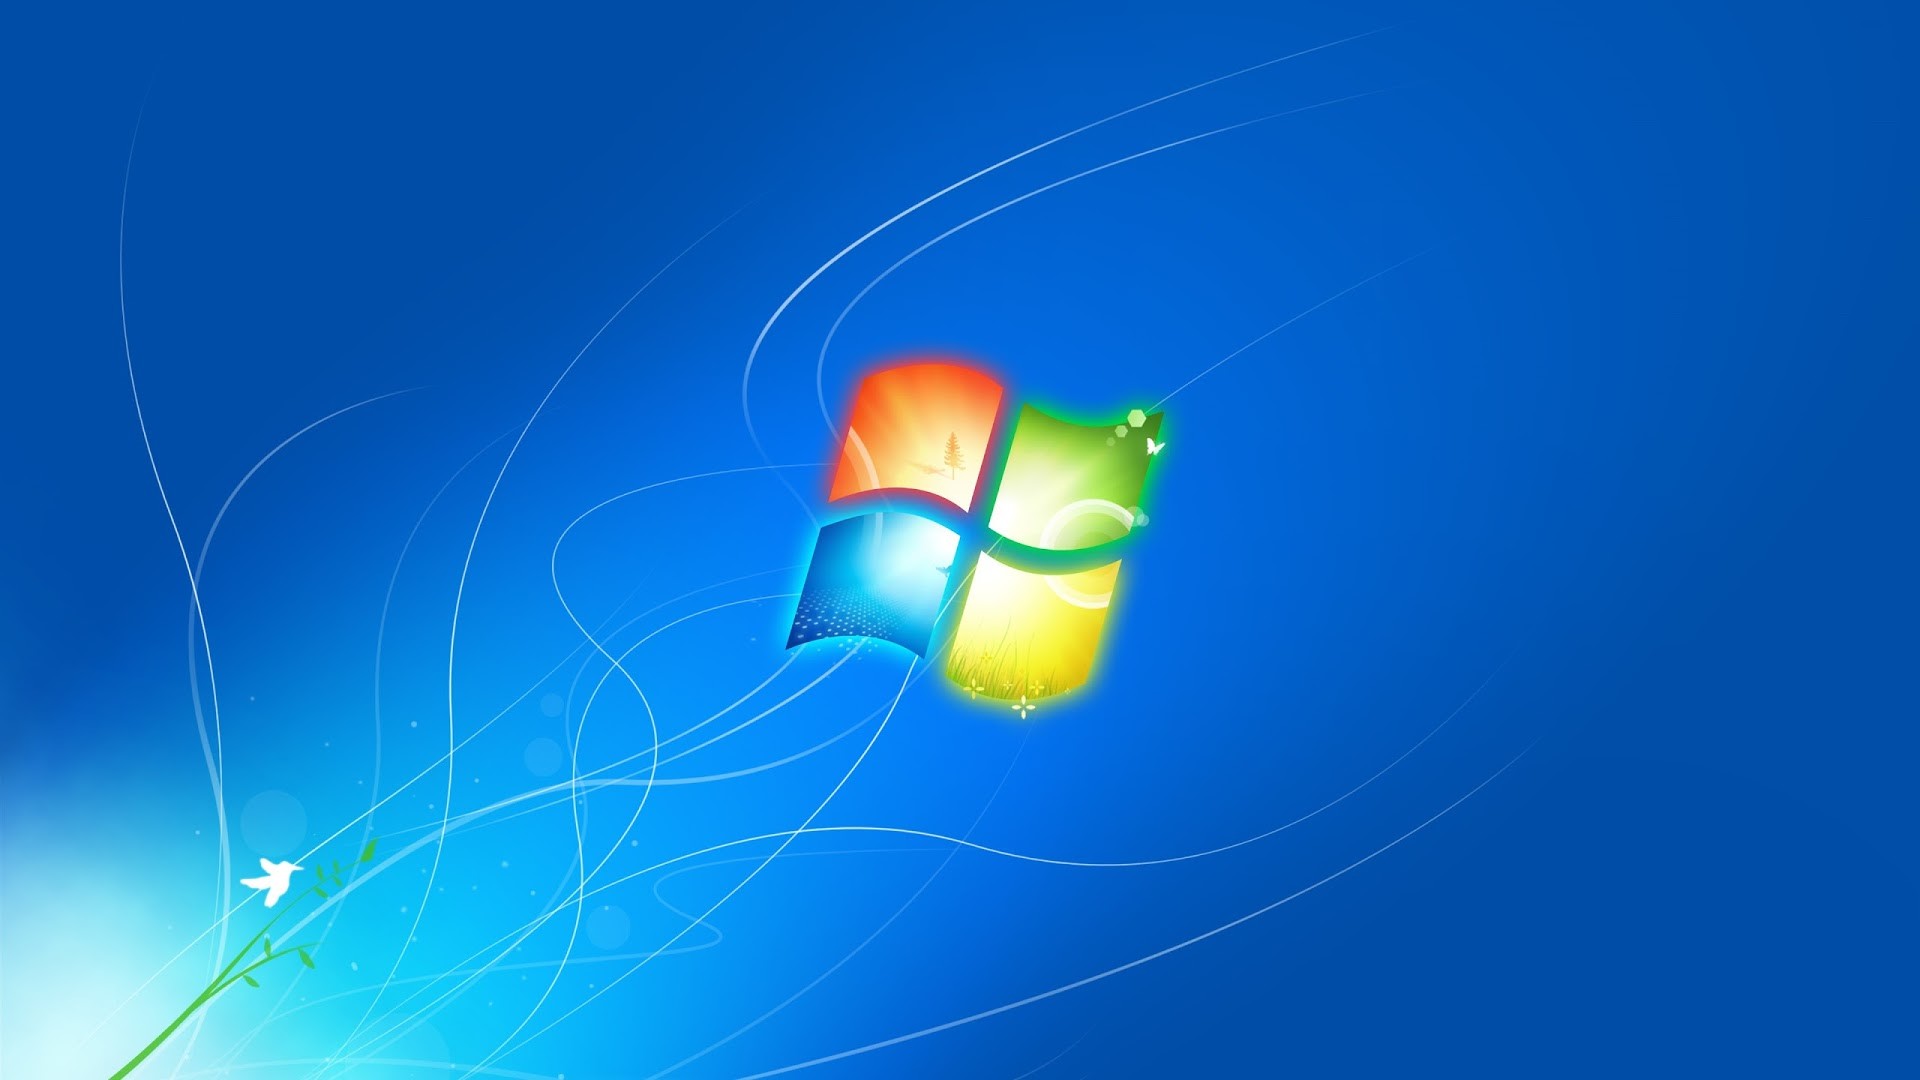  Windows  7  Wallpaper  1366x768   WallpaperTag